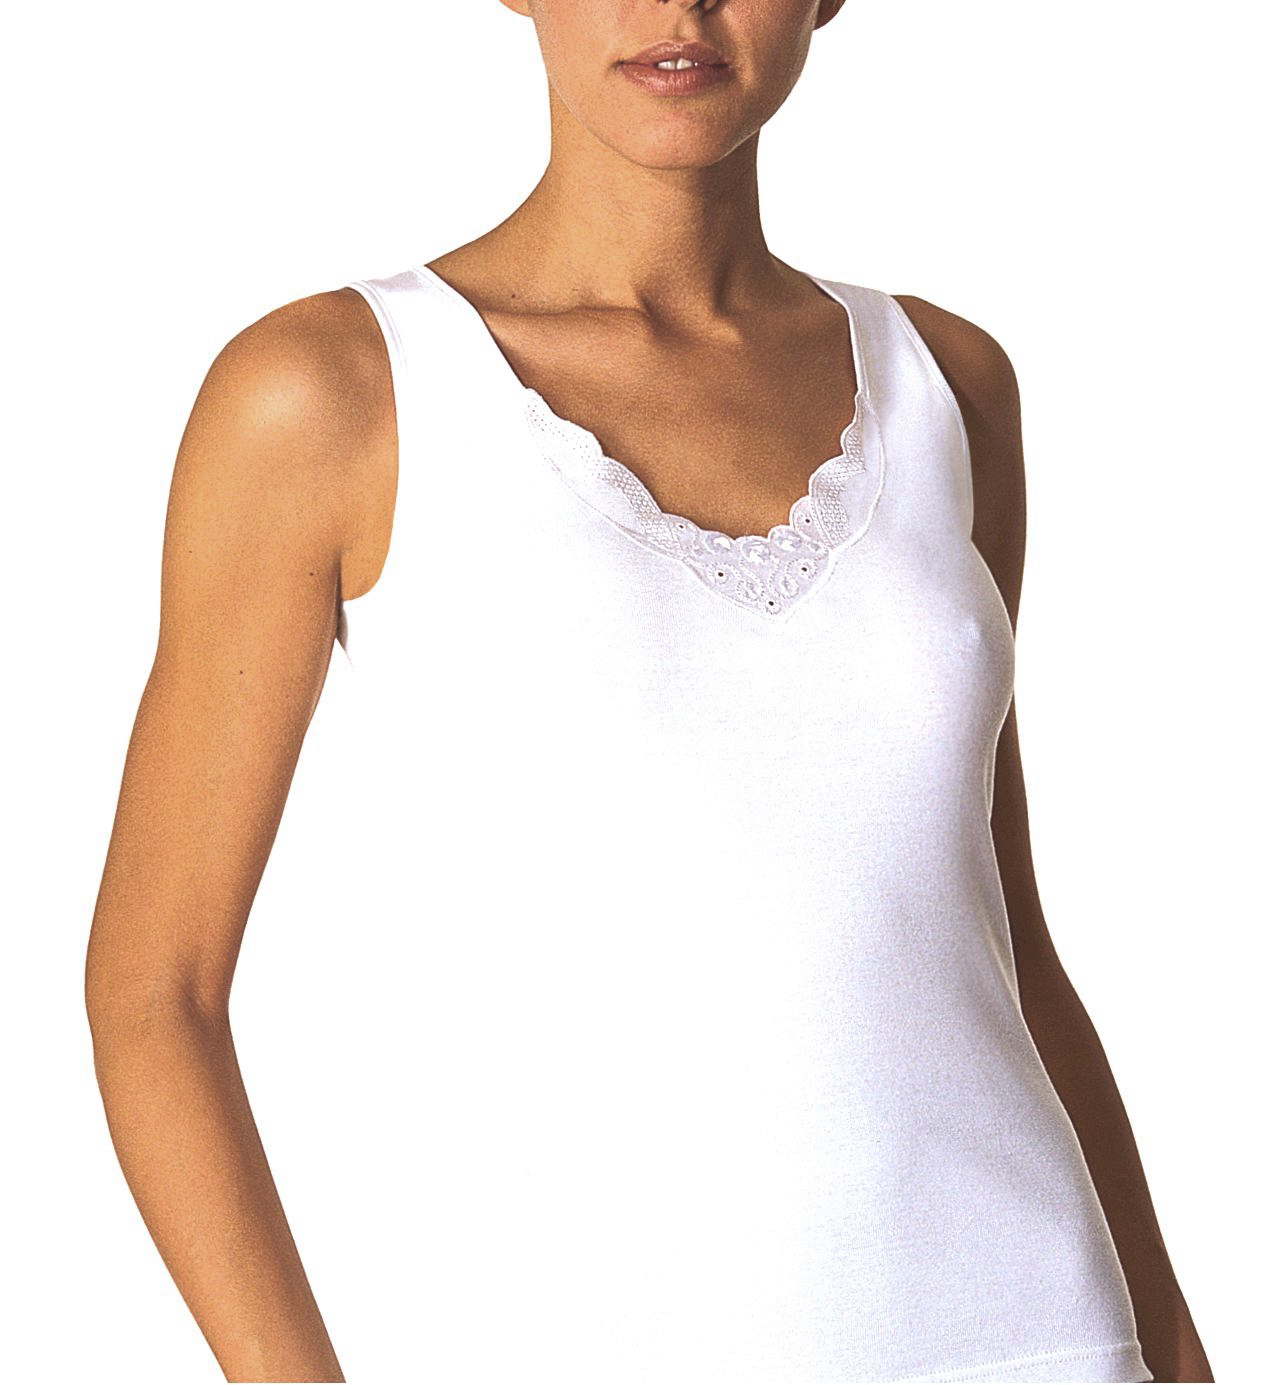 AVET 7505 ✓ Camiseta interior mujer bordado